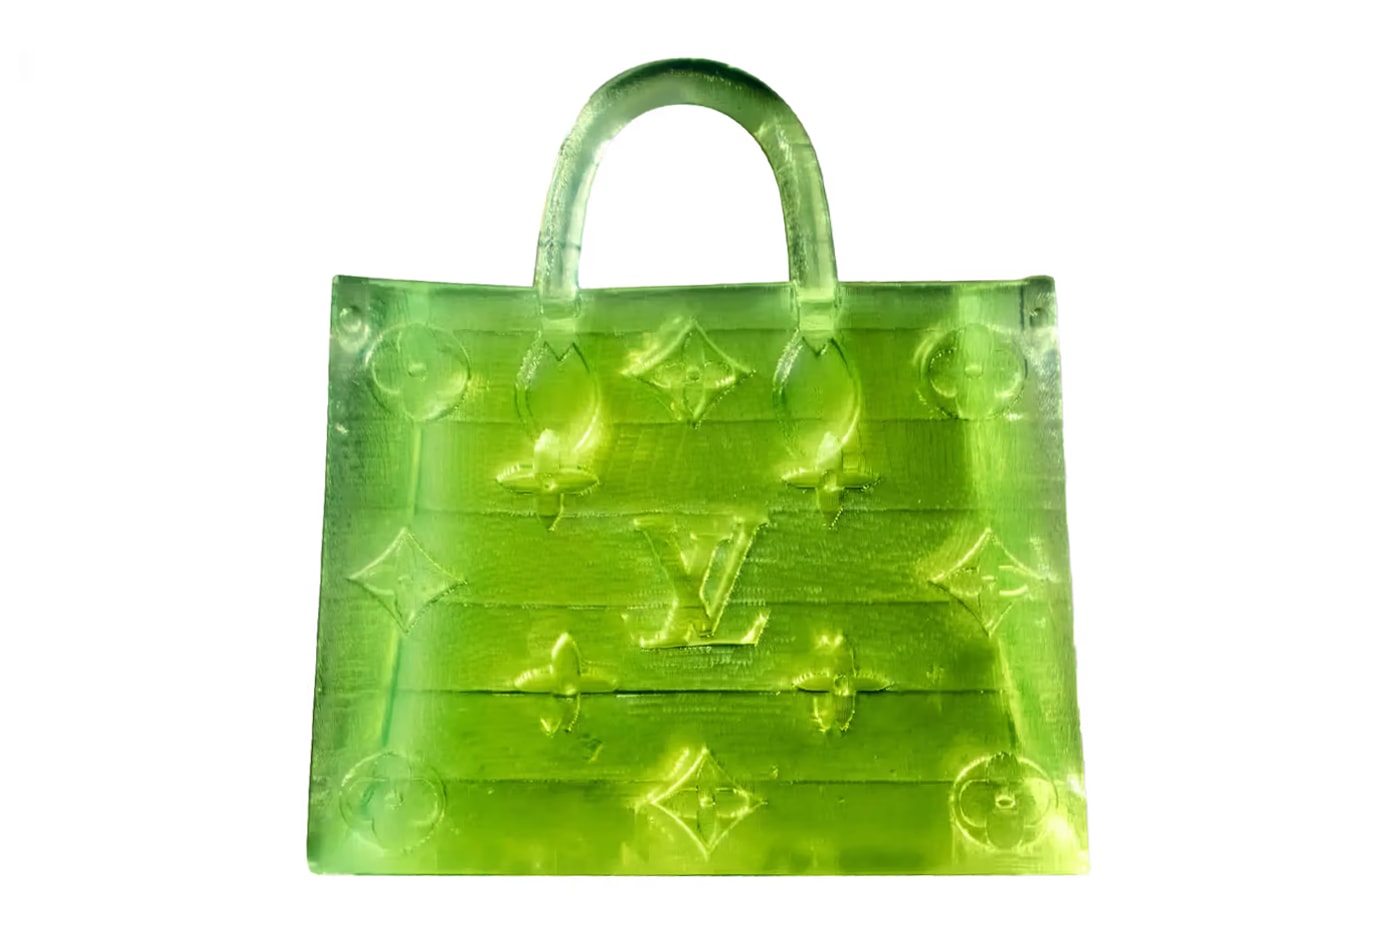 MSCHF microscopic handbag louis vuitton onthego tote green translucent microscope release info